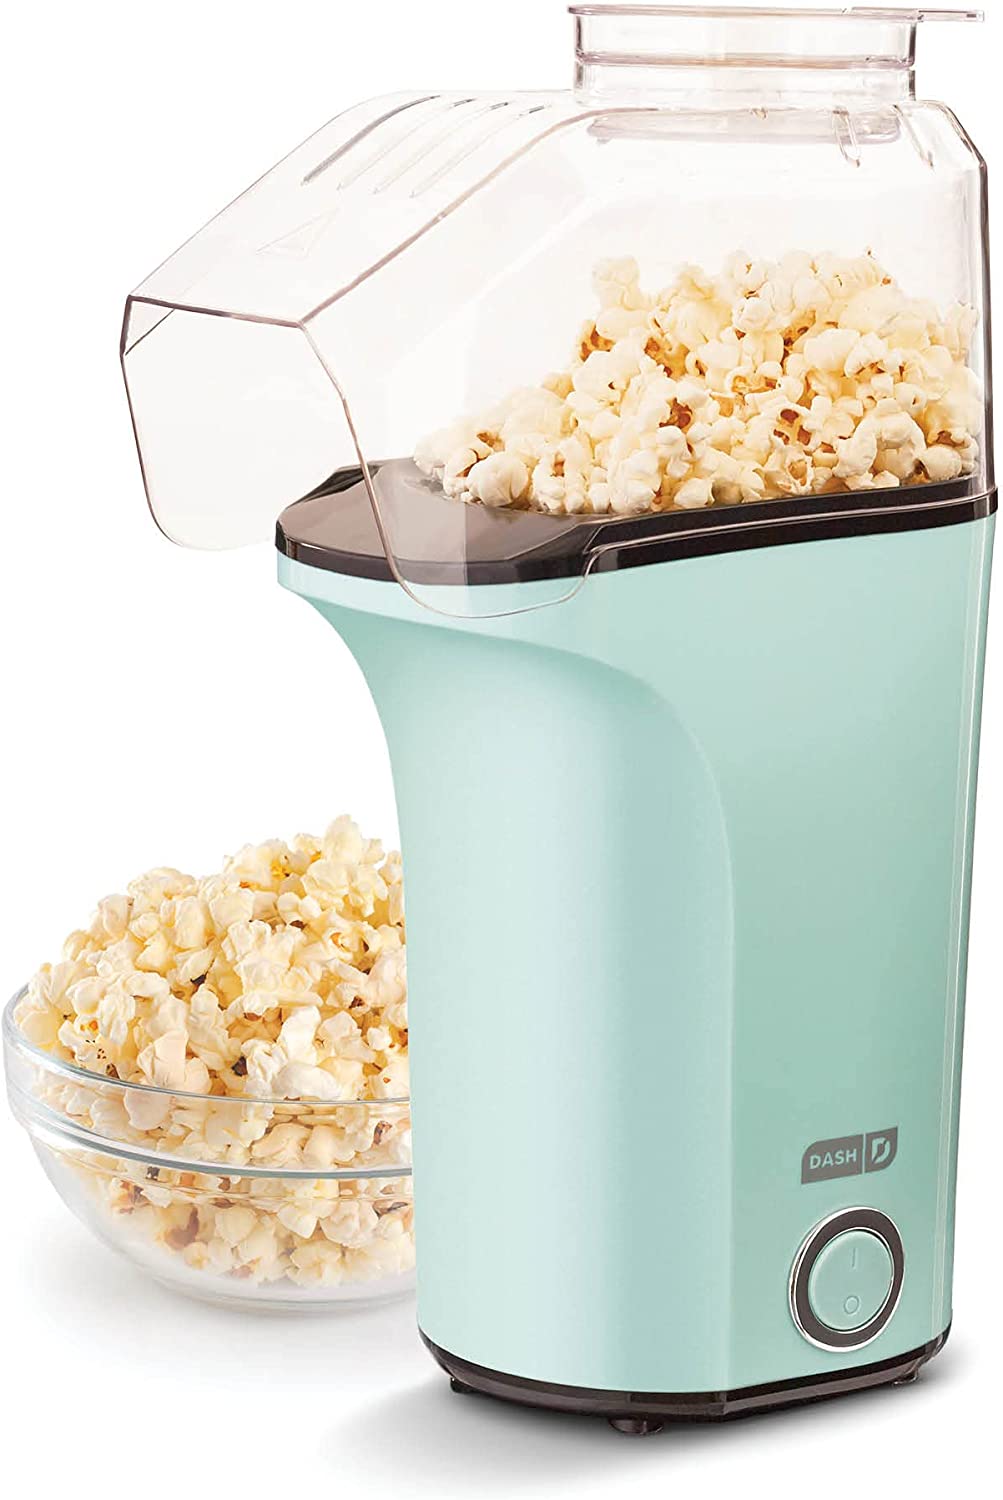 https://www.dontwasteyourmoney.com/wp-content/uploads/2022/02/dash-removable-dishwasher-safe-parts-hot-air-popcorn-maker.jpg